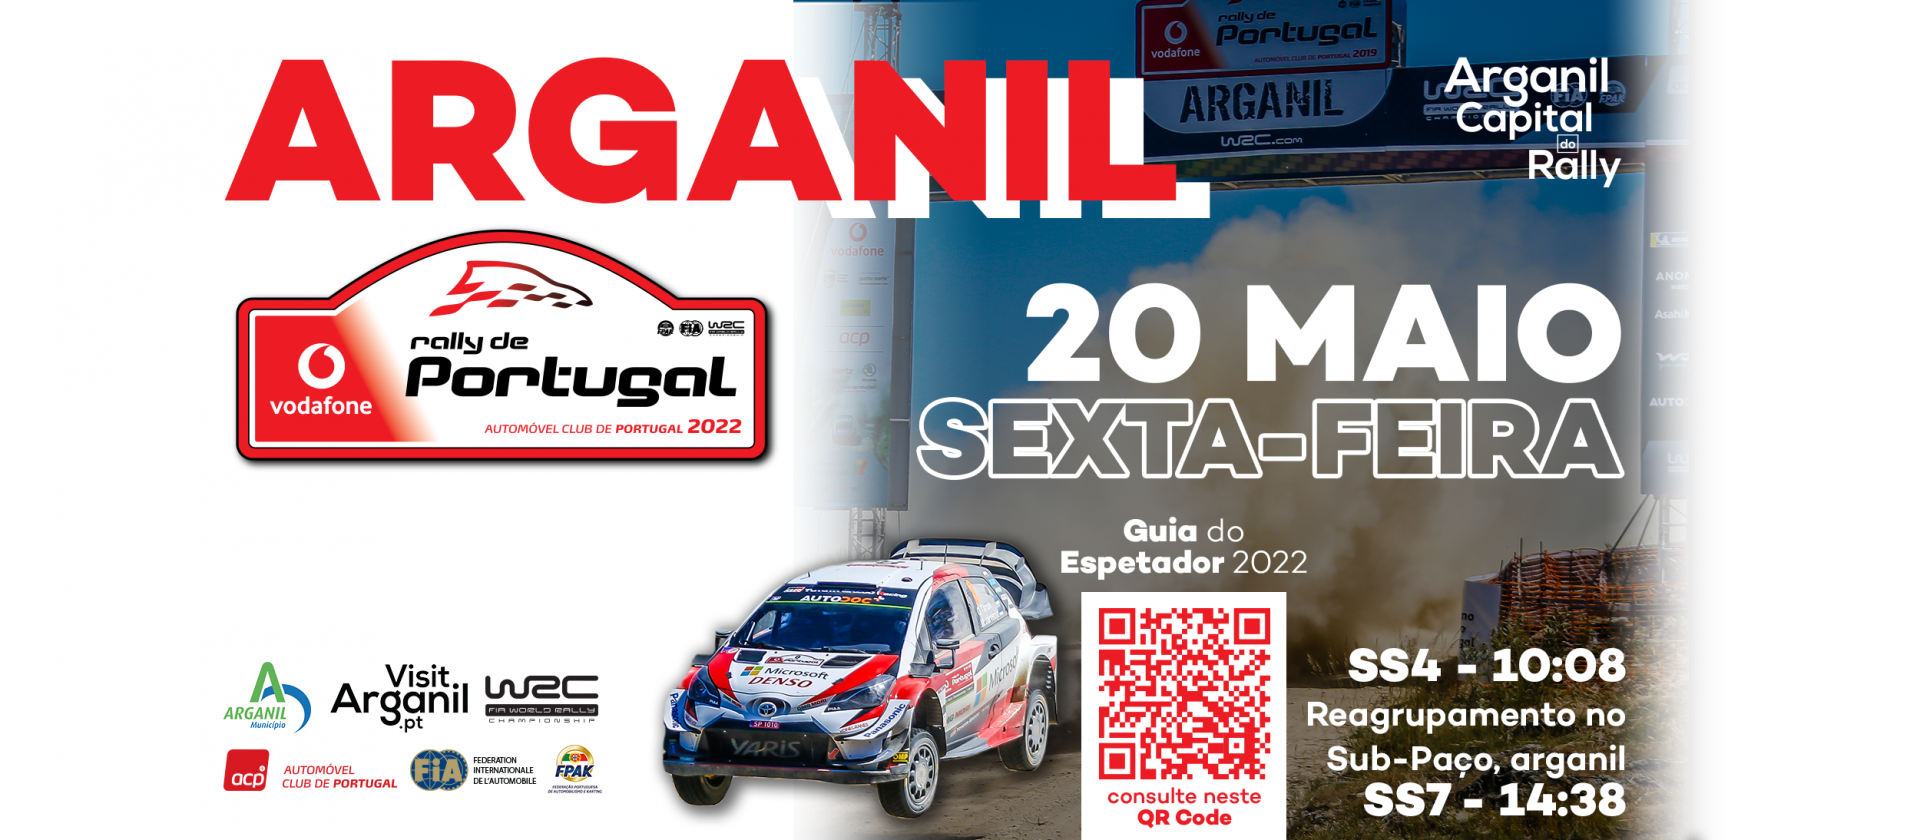 Rally de Portugal - Arganil 2022